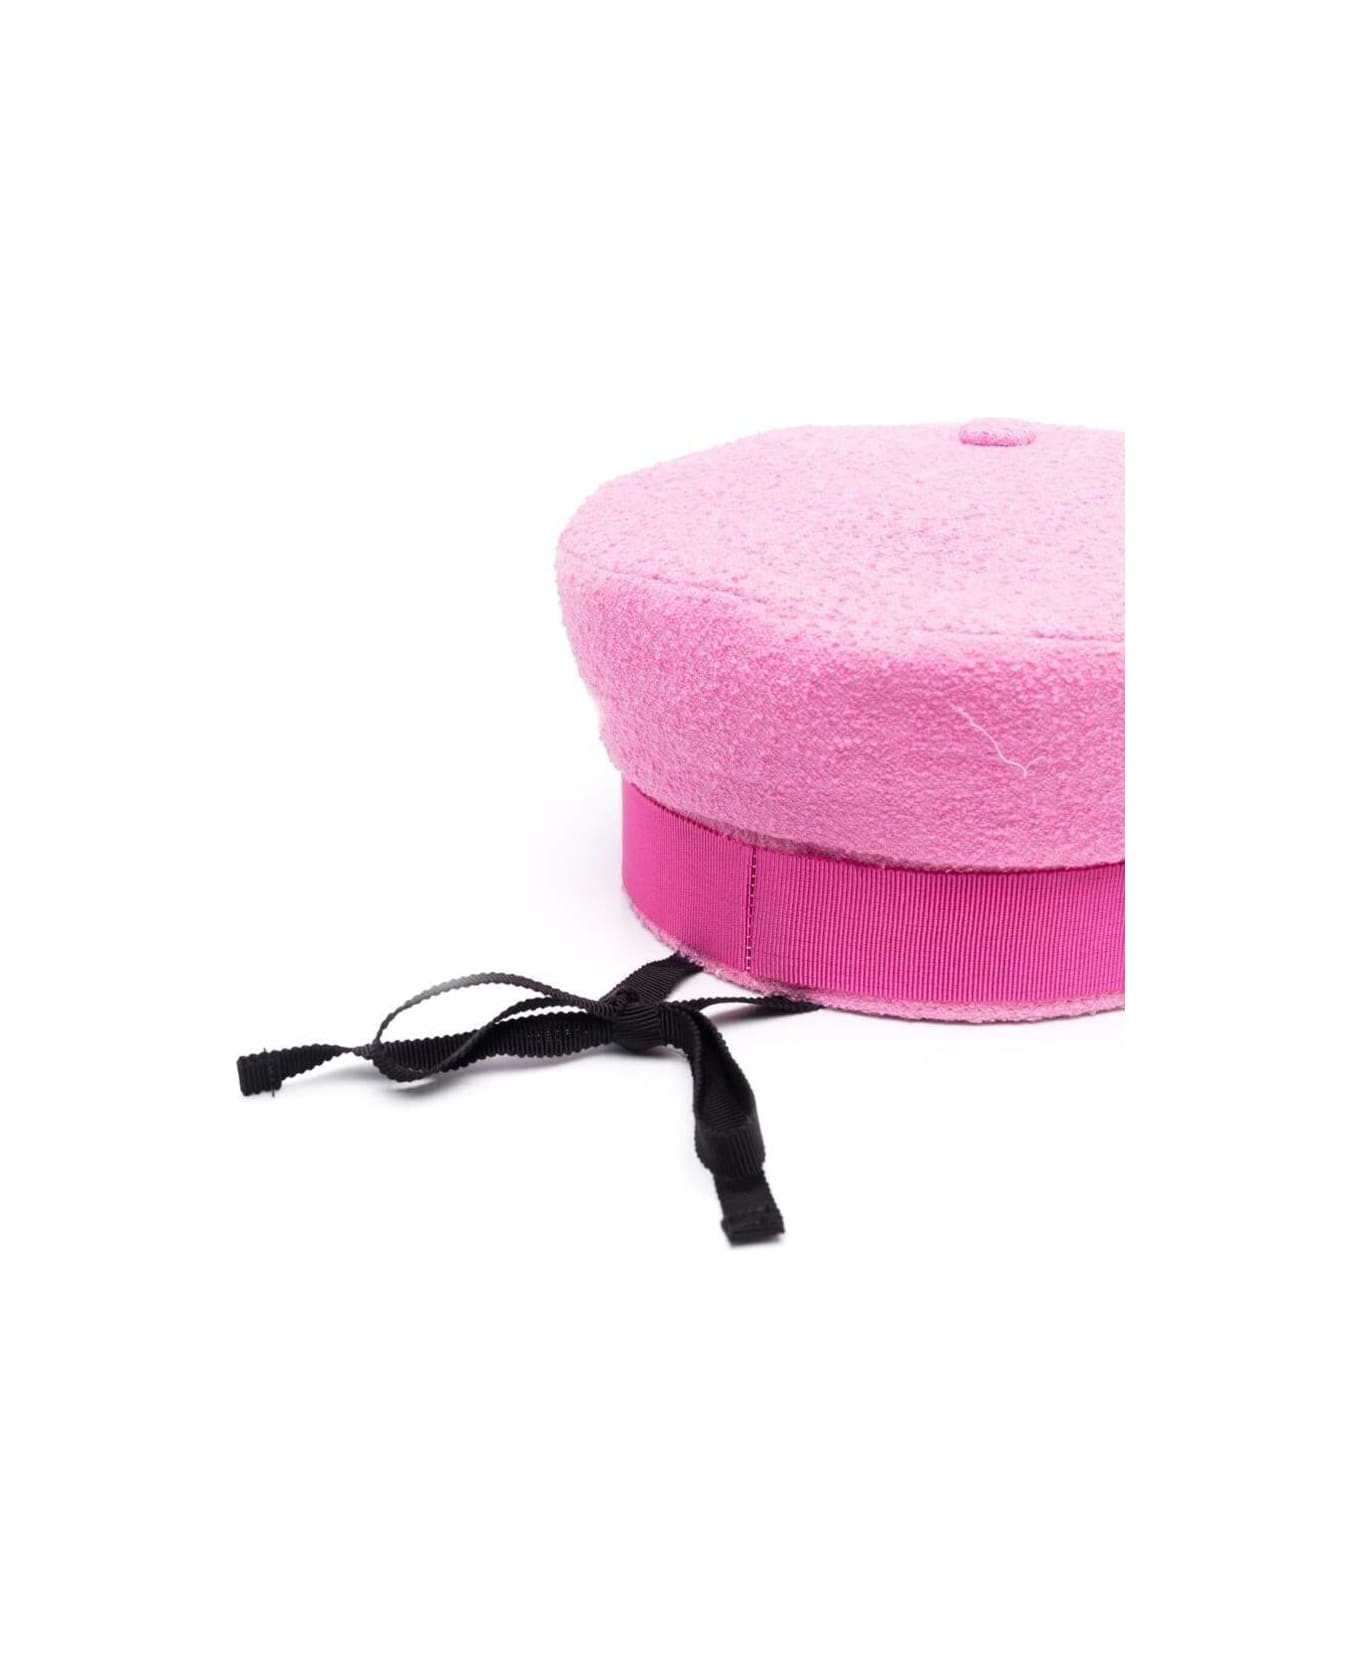 Patou Pink Sailor Hat With Logo Print In Cotton Blend Wonan - Pink 帽子